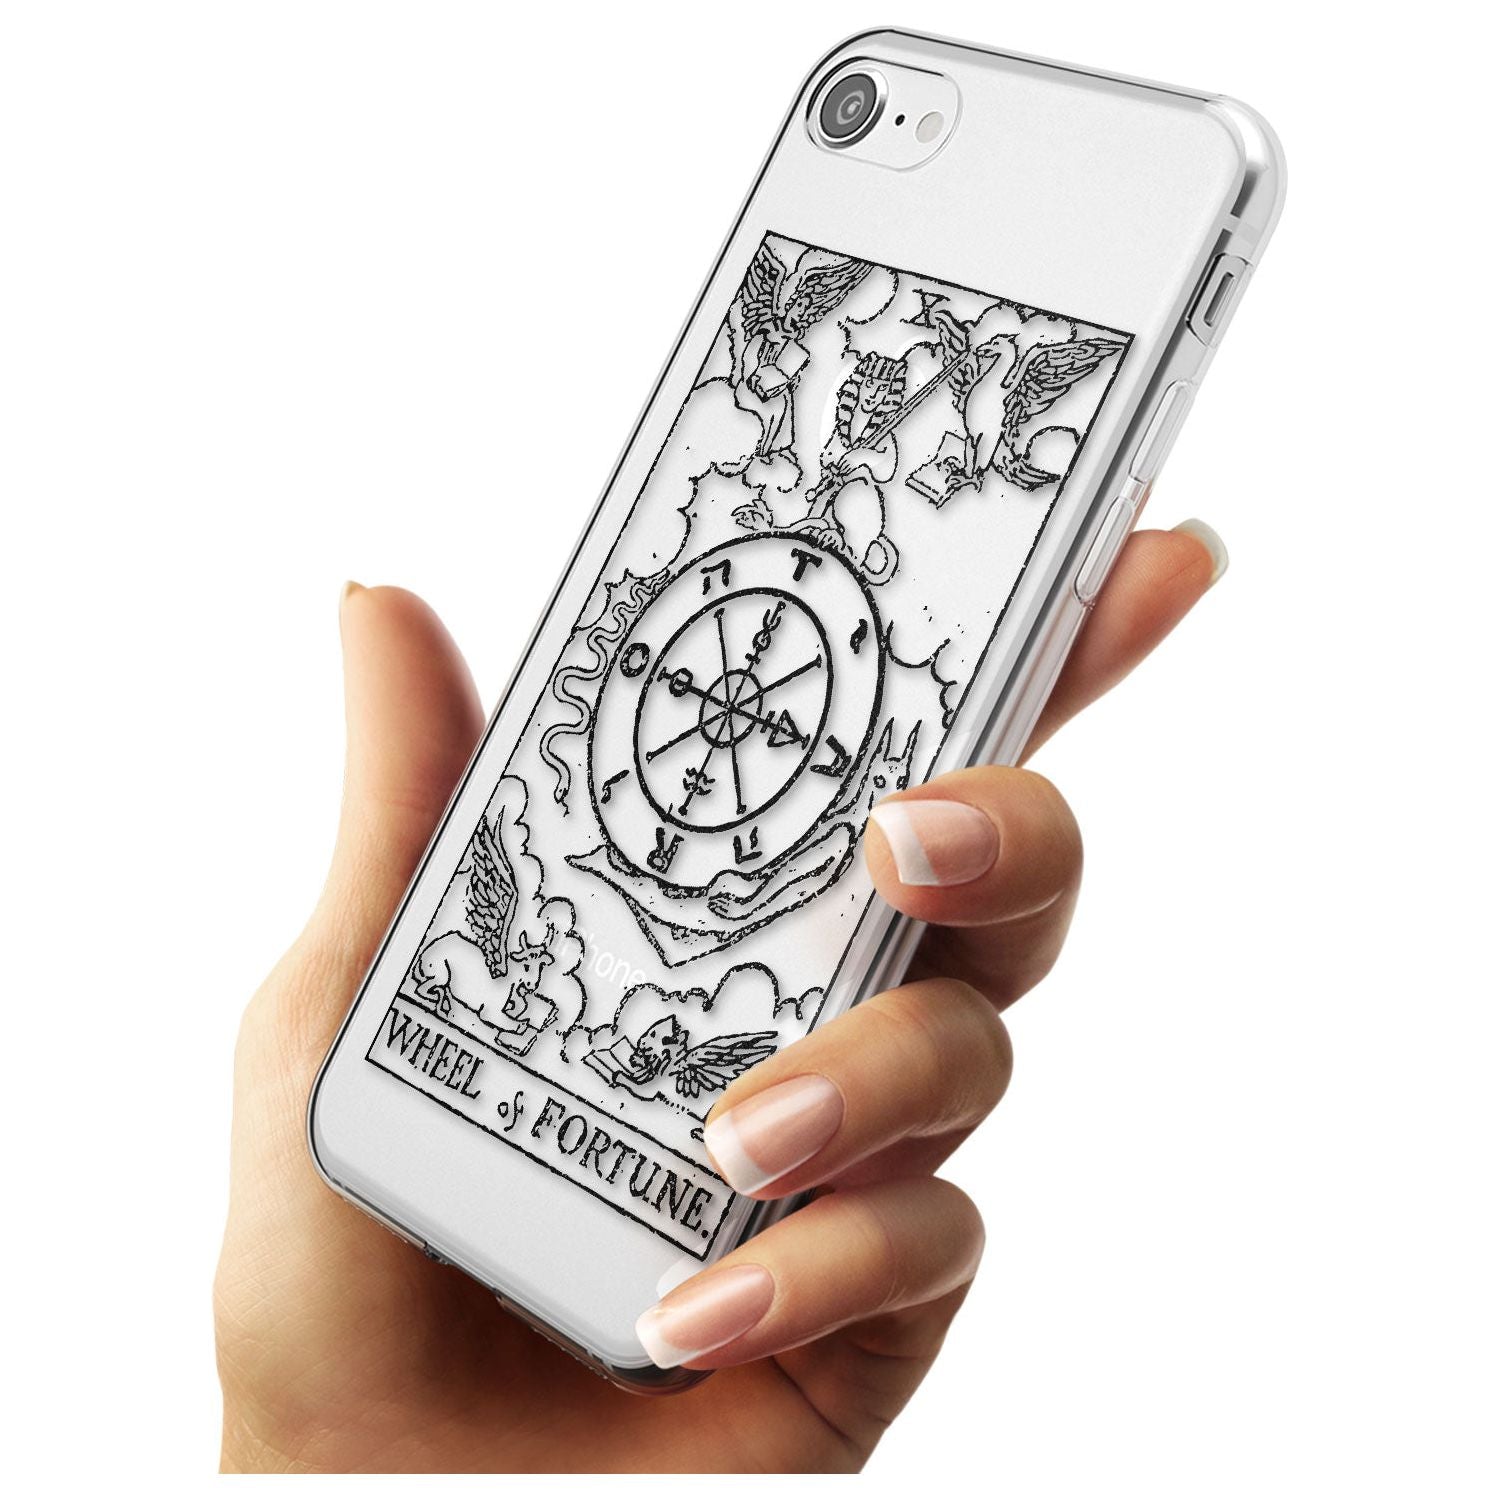 Wheel of Fortune Tarot Card - Transparent Black Impact Phone Case for iPhone SE 8 7 Plus